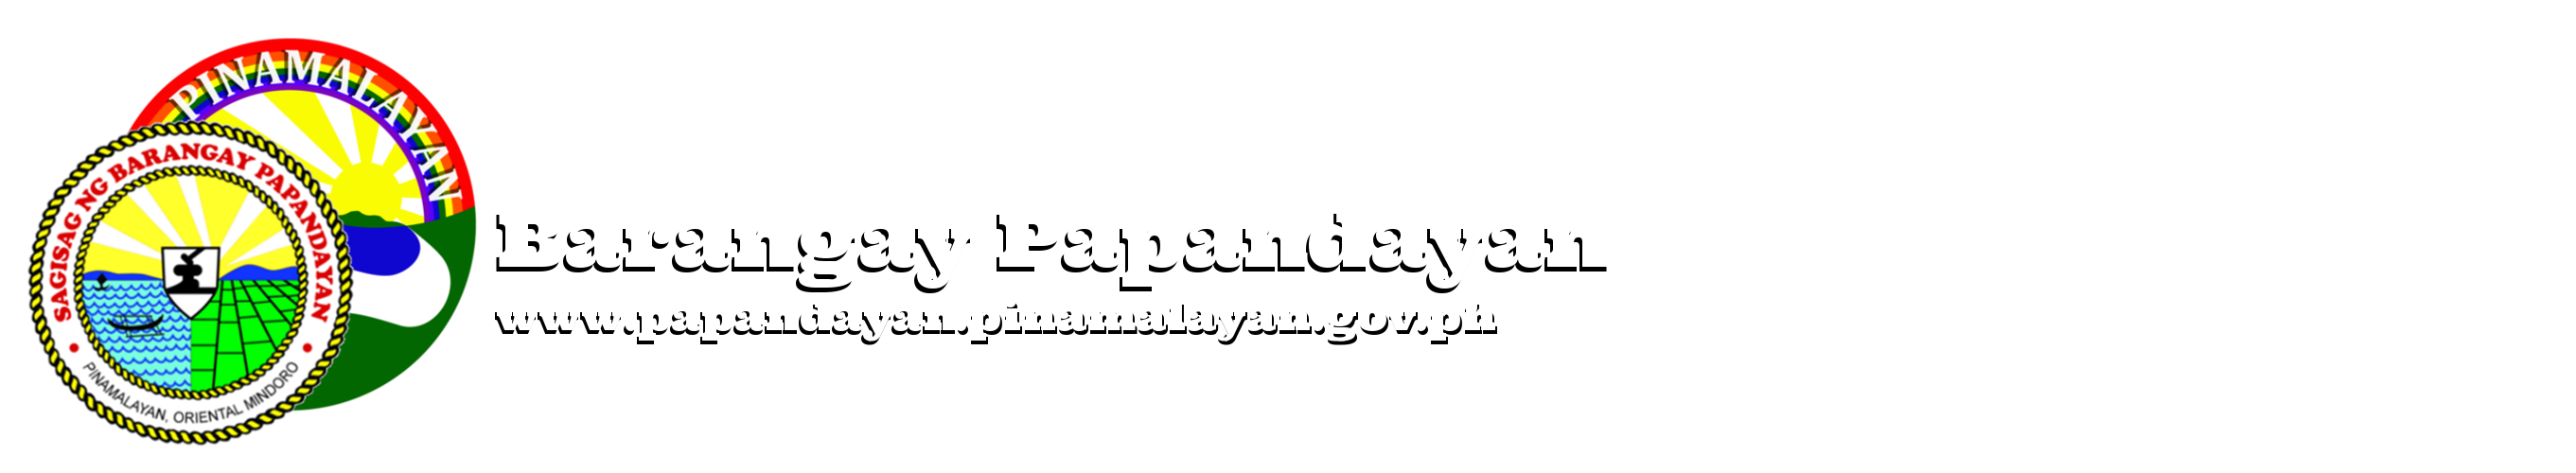 www.papandayan.pinamalayan.gov.ph